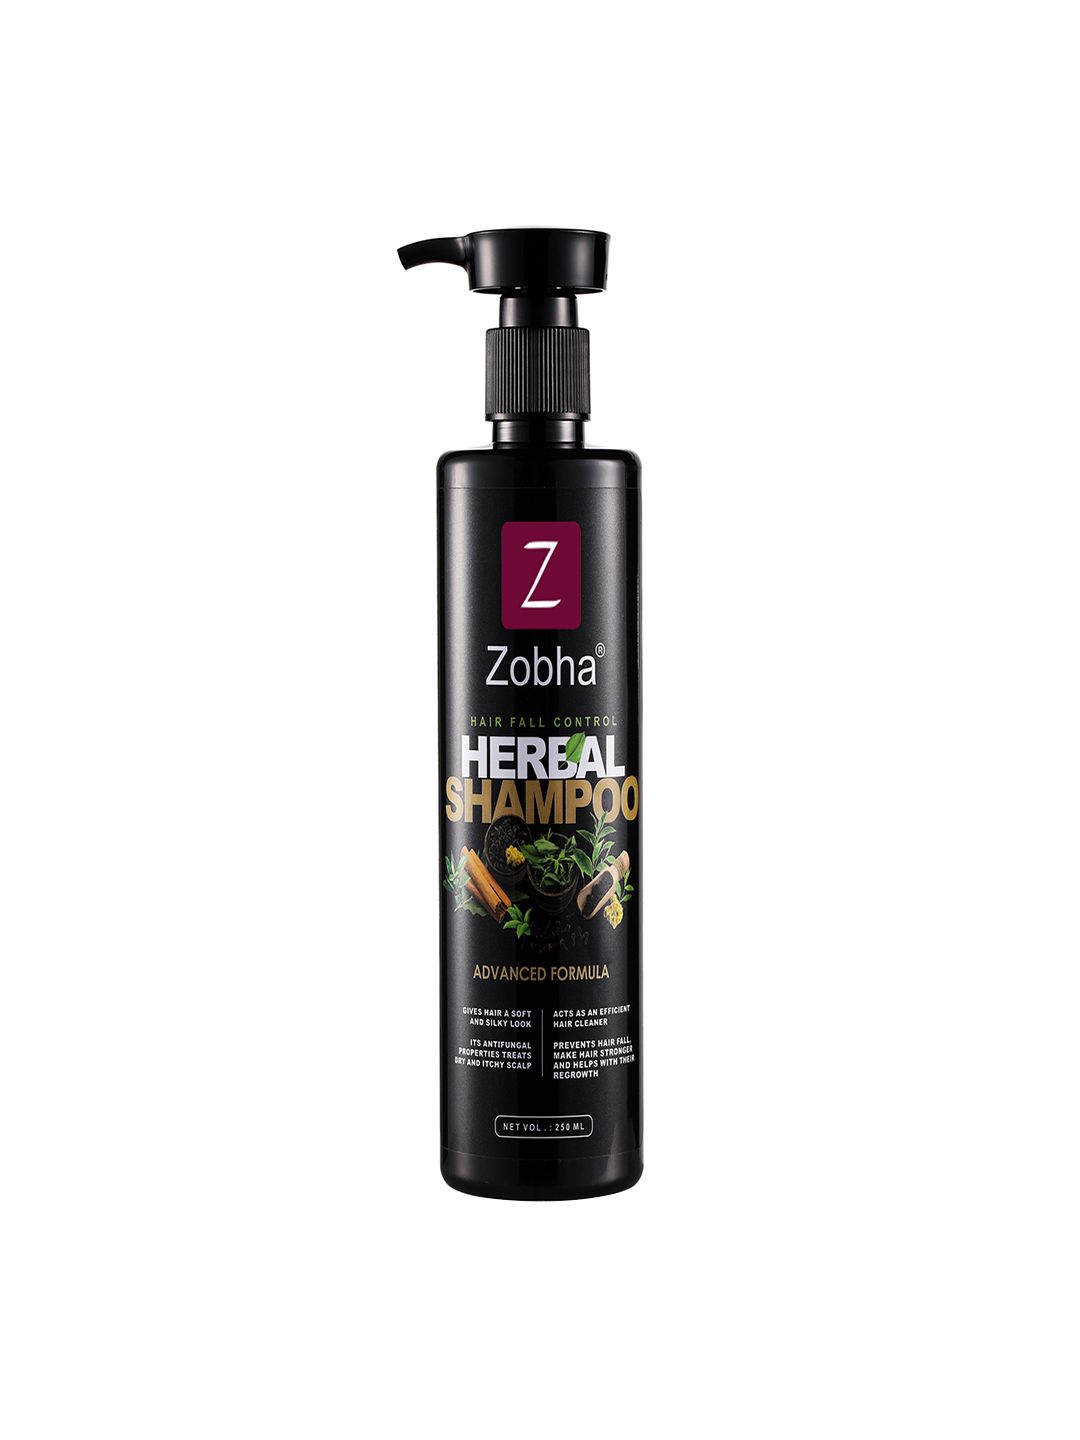 Zobha Hair Fall Control Herbal Shampoo (250mL)